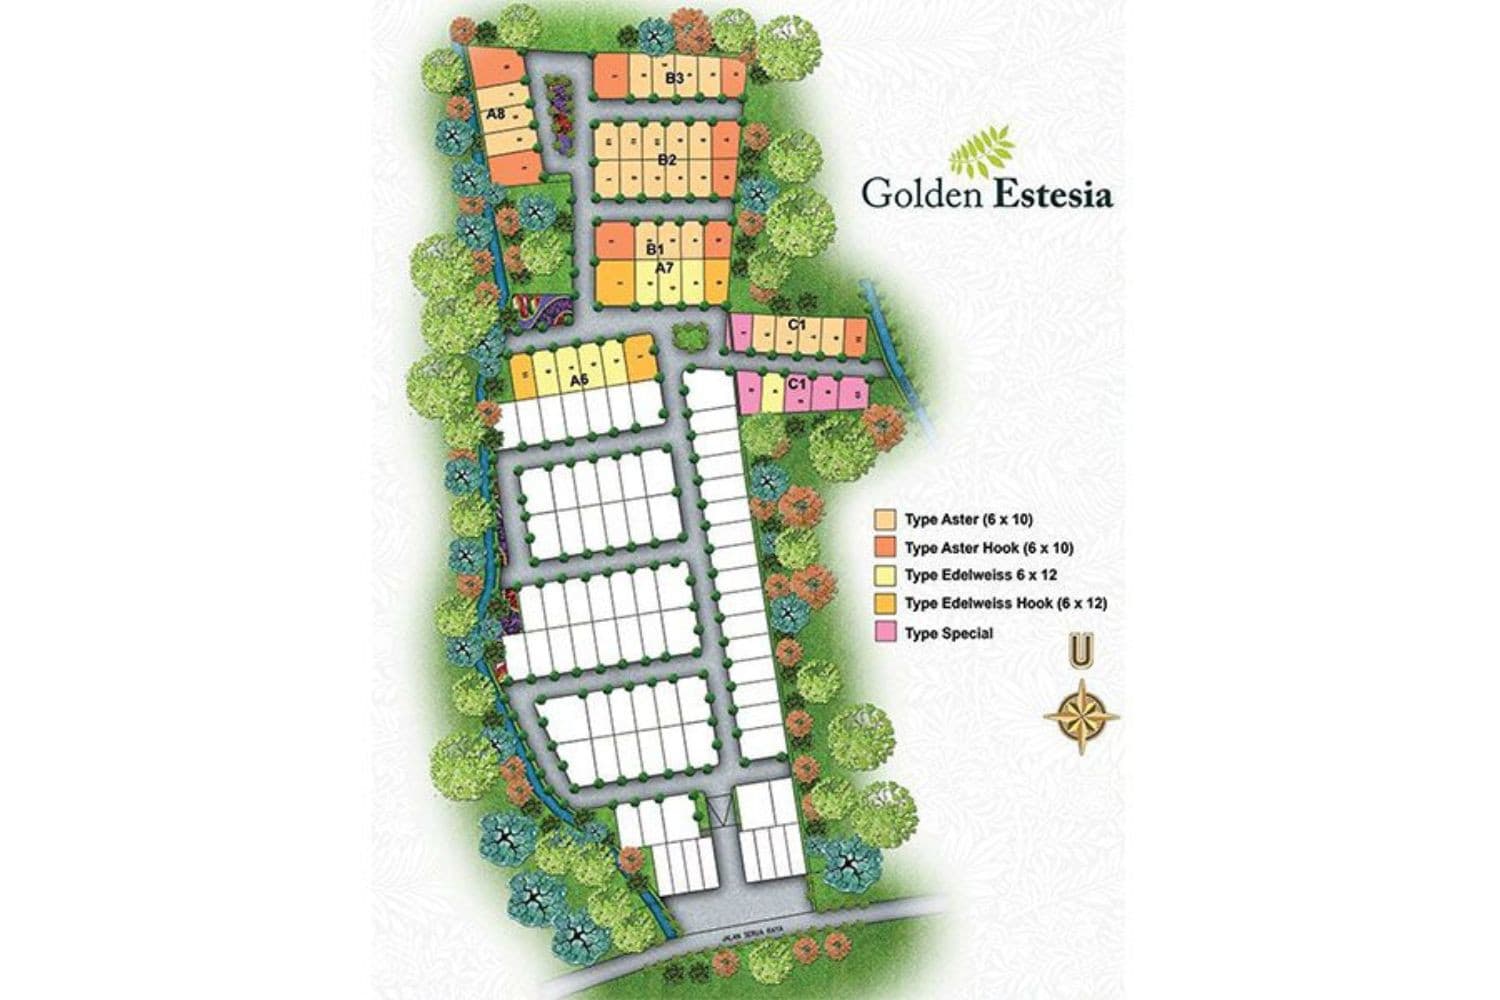 Siteplan Golden Estesia